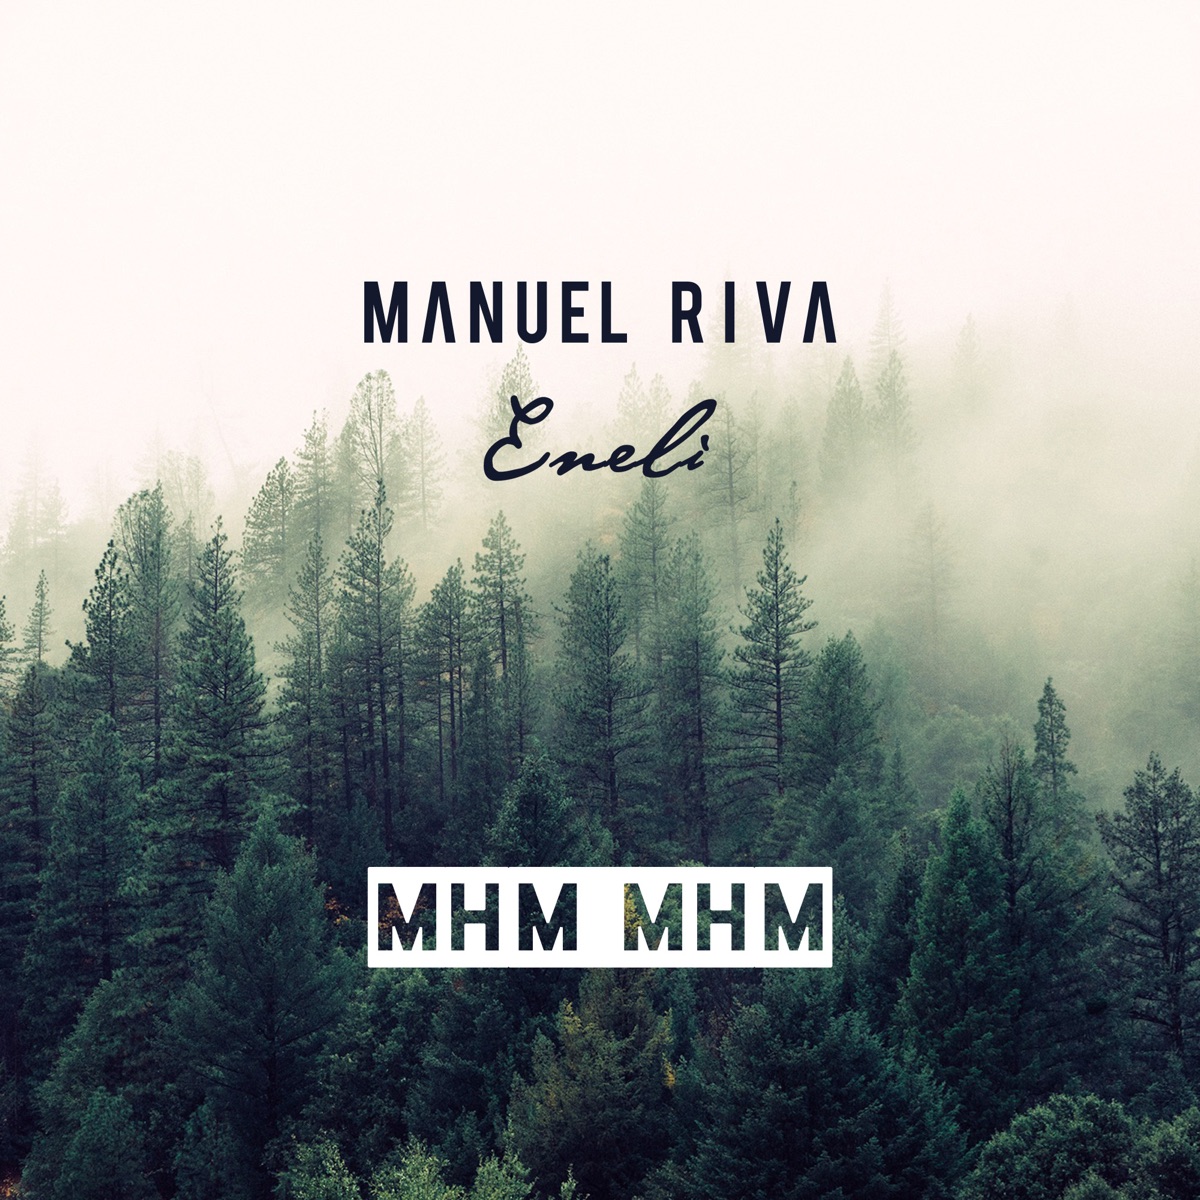 Mhm Mhm - Single by Manuel Riva & Eneli on Apple Music